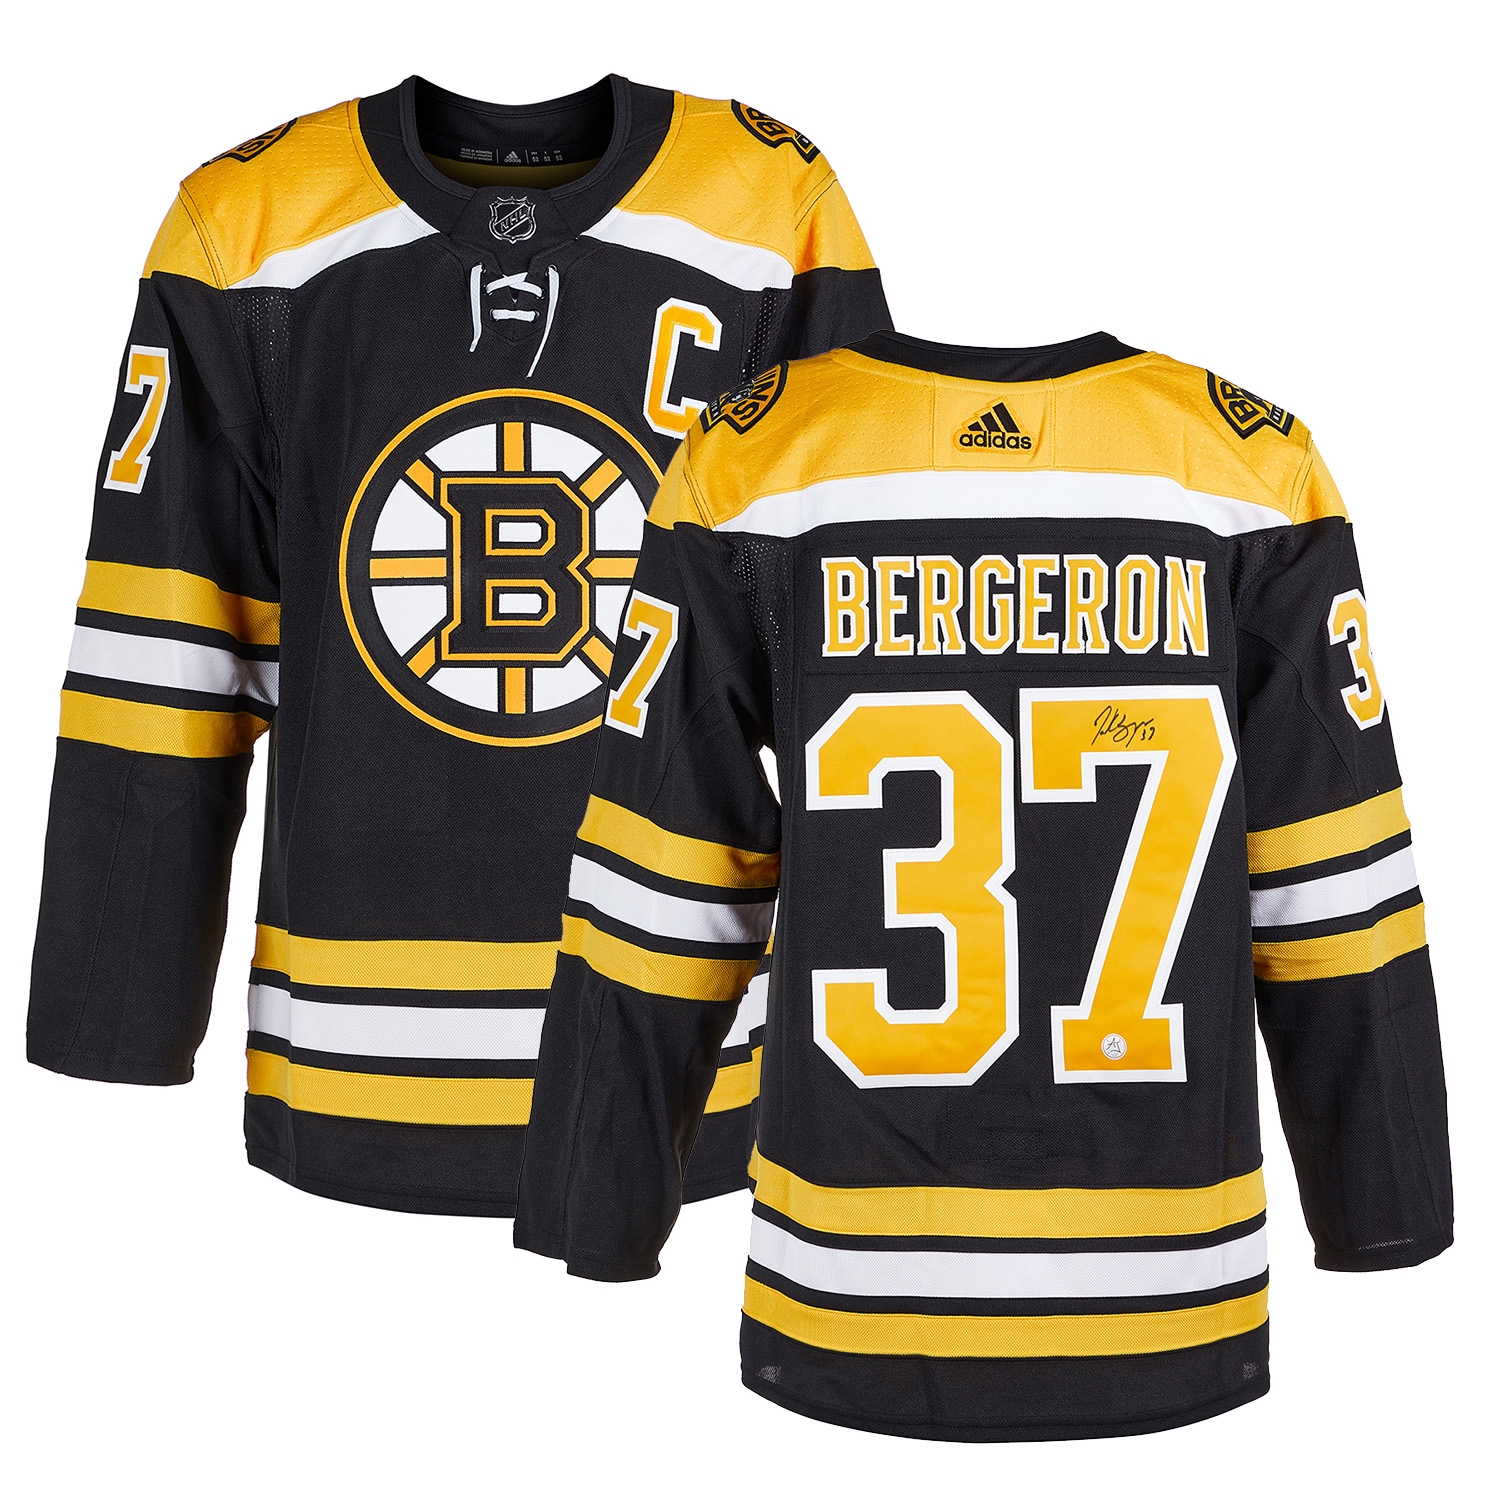 Patrice Bergeron Autographed Boston Bruins adidas Jersey